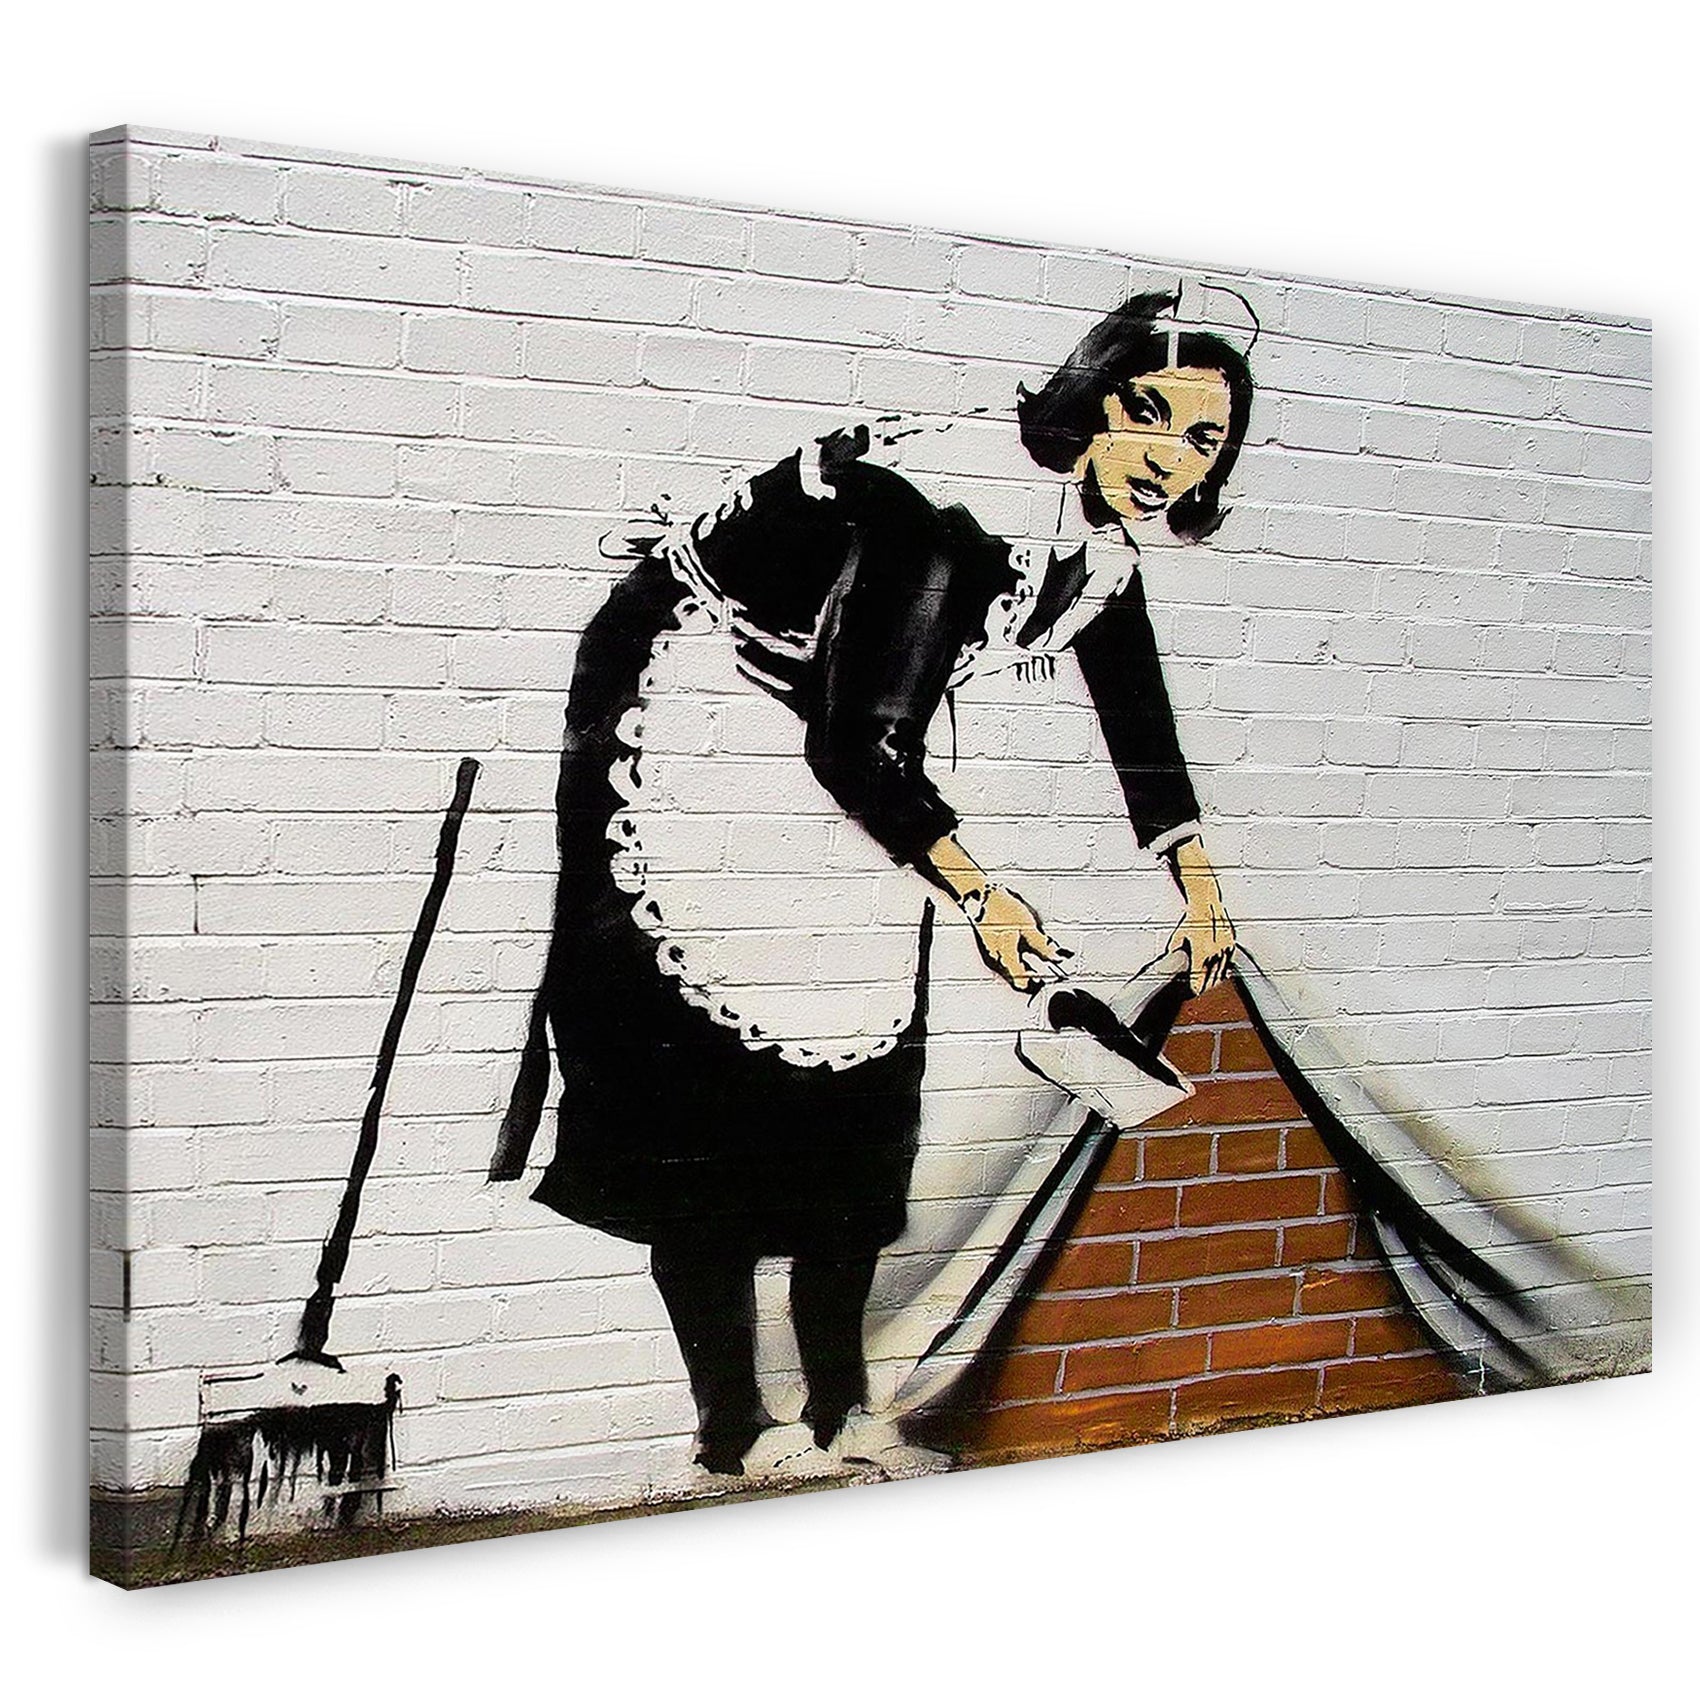 Leinwandbild Banksy - Putzfrau kehrt Dreck unter Wand-Bemalung Graffiti Street Art